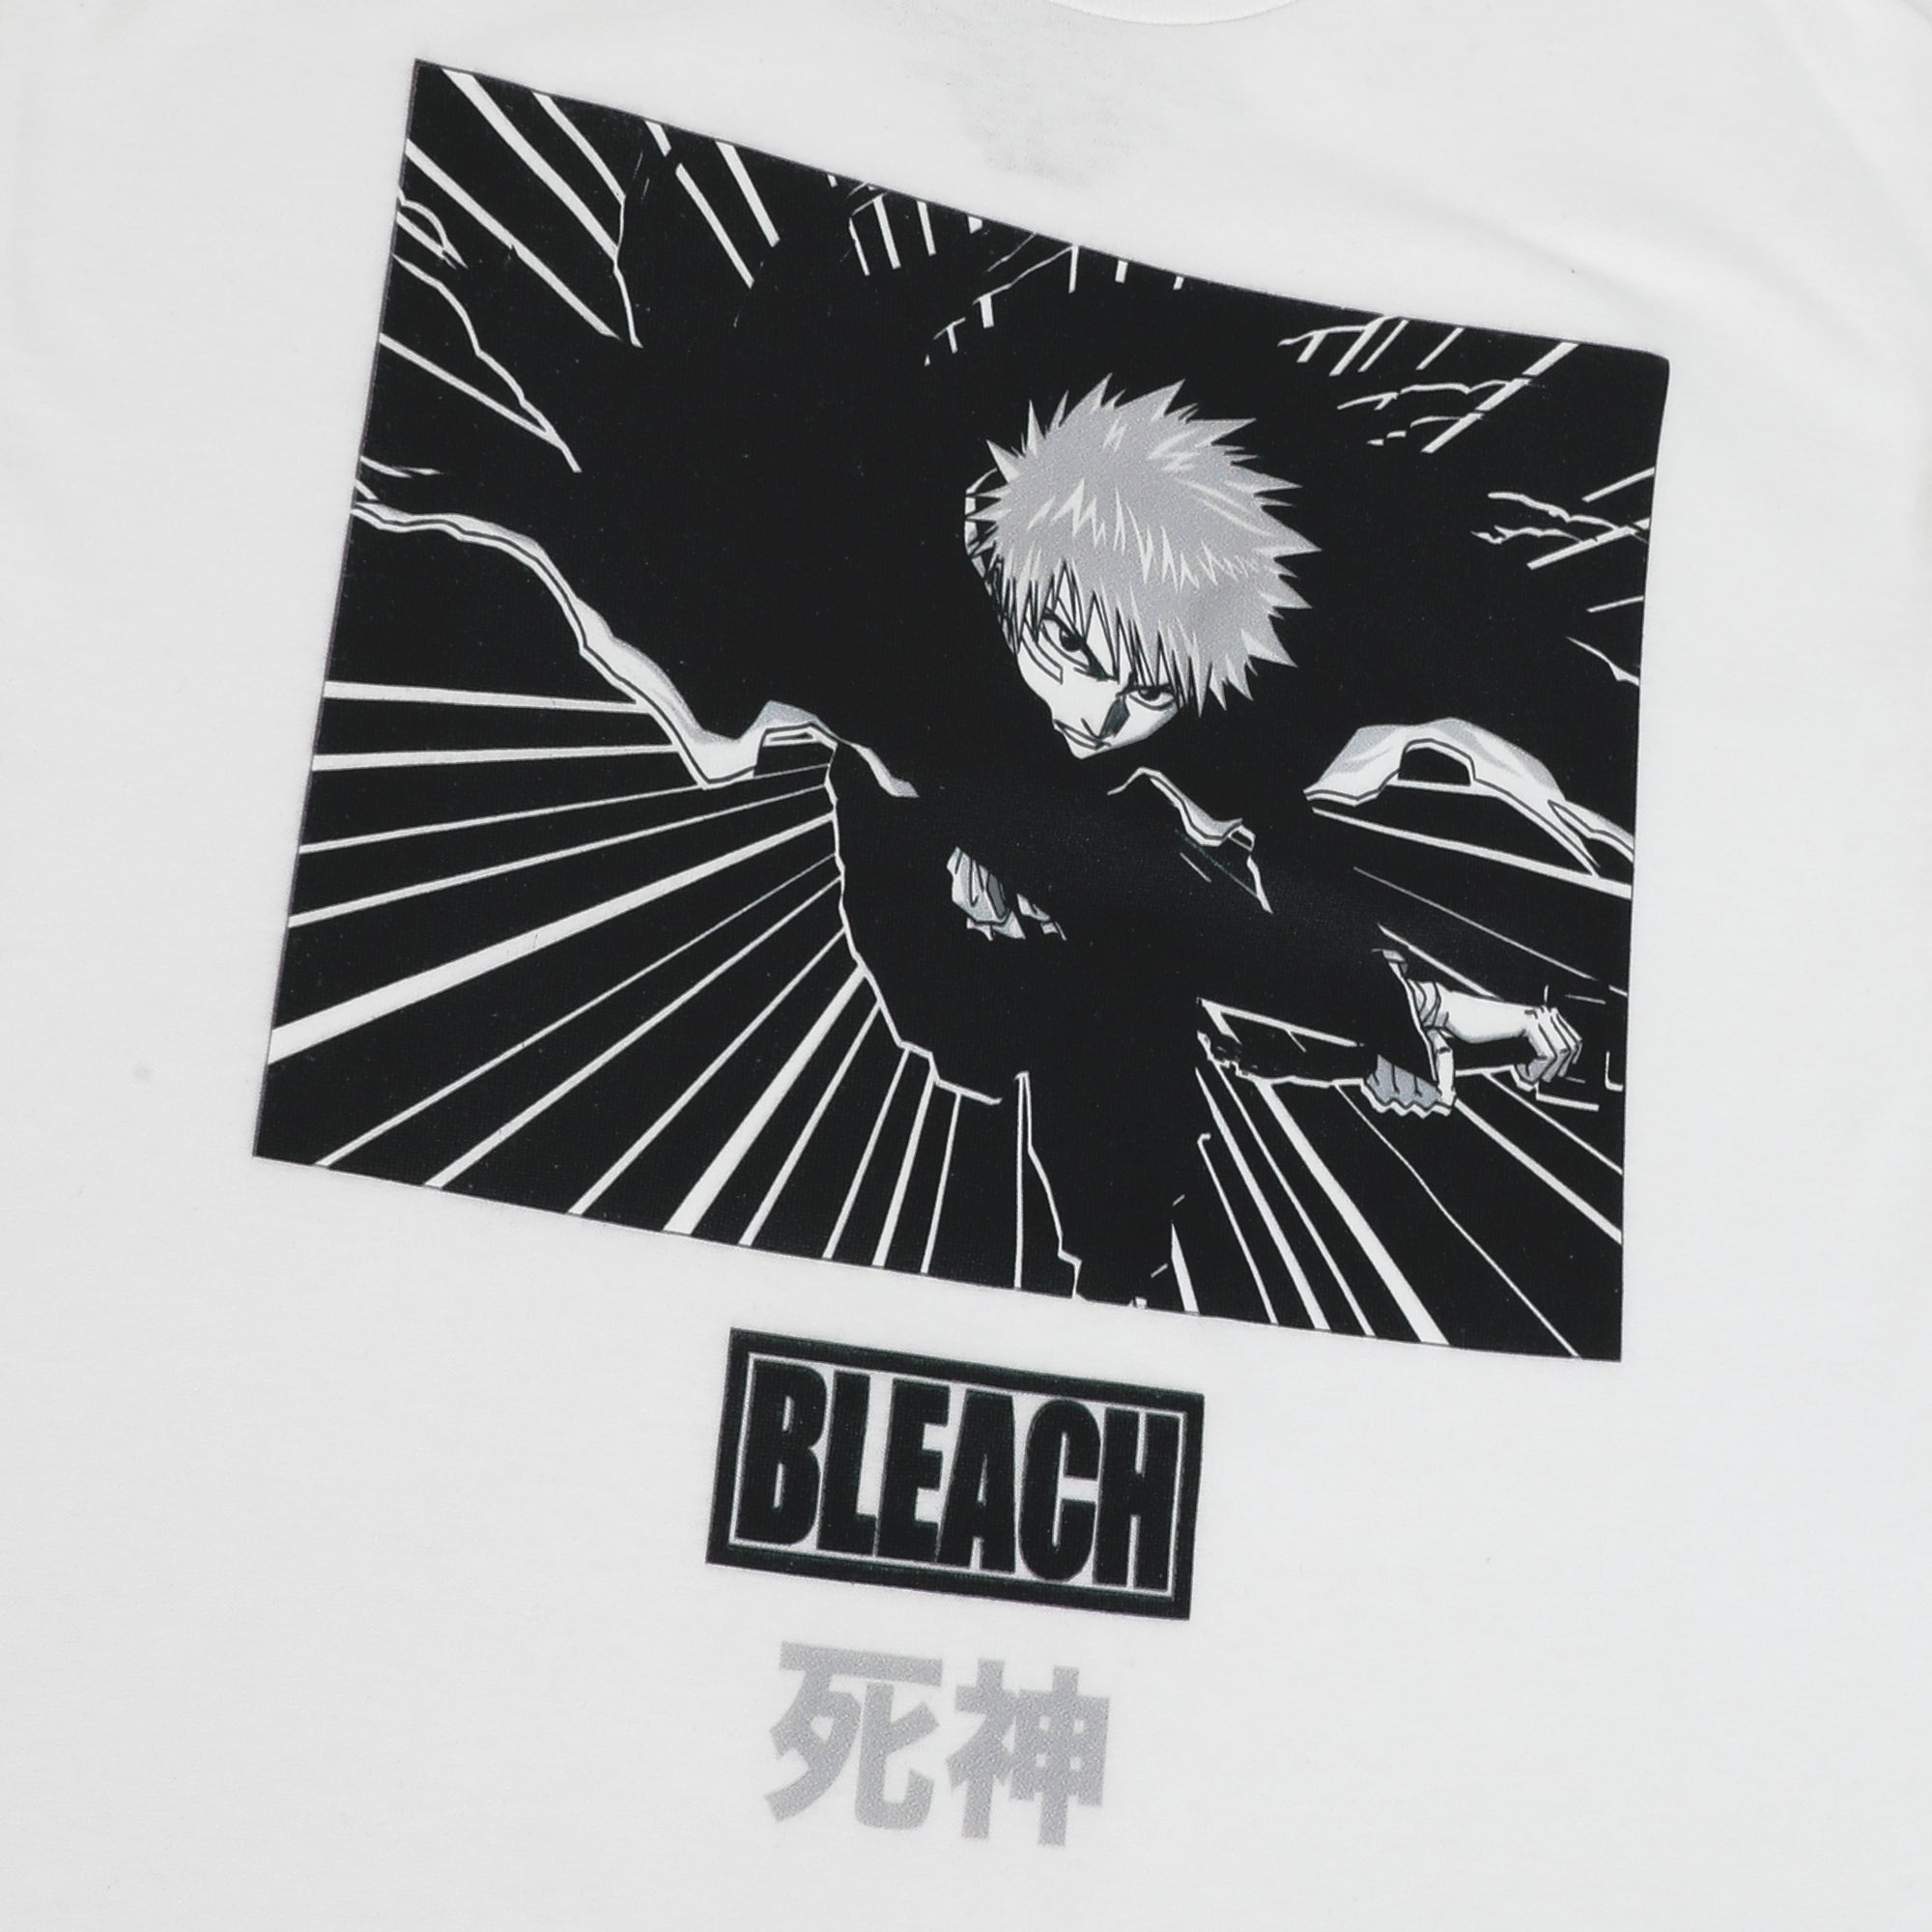 BLEACH - Ichigo and Aizens Espada T-Shirt - Crunchyroll Exclusive!